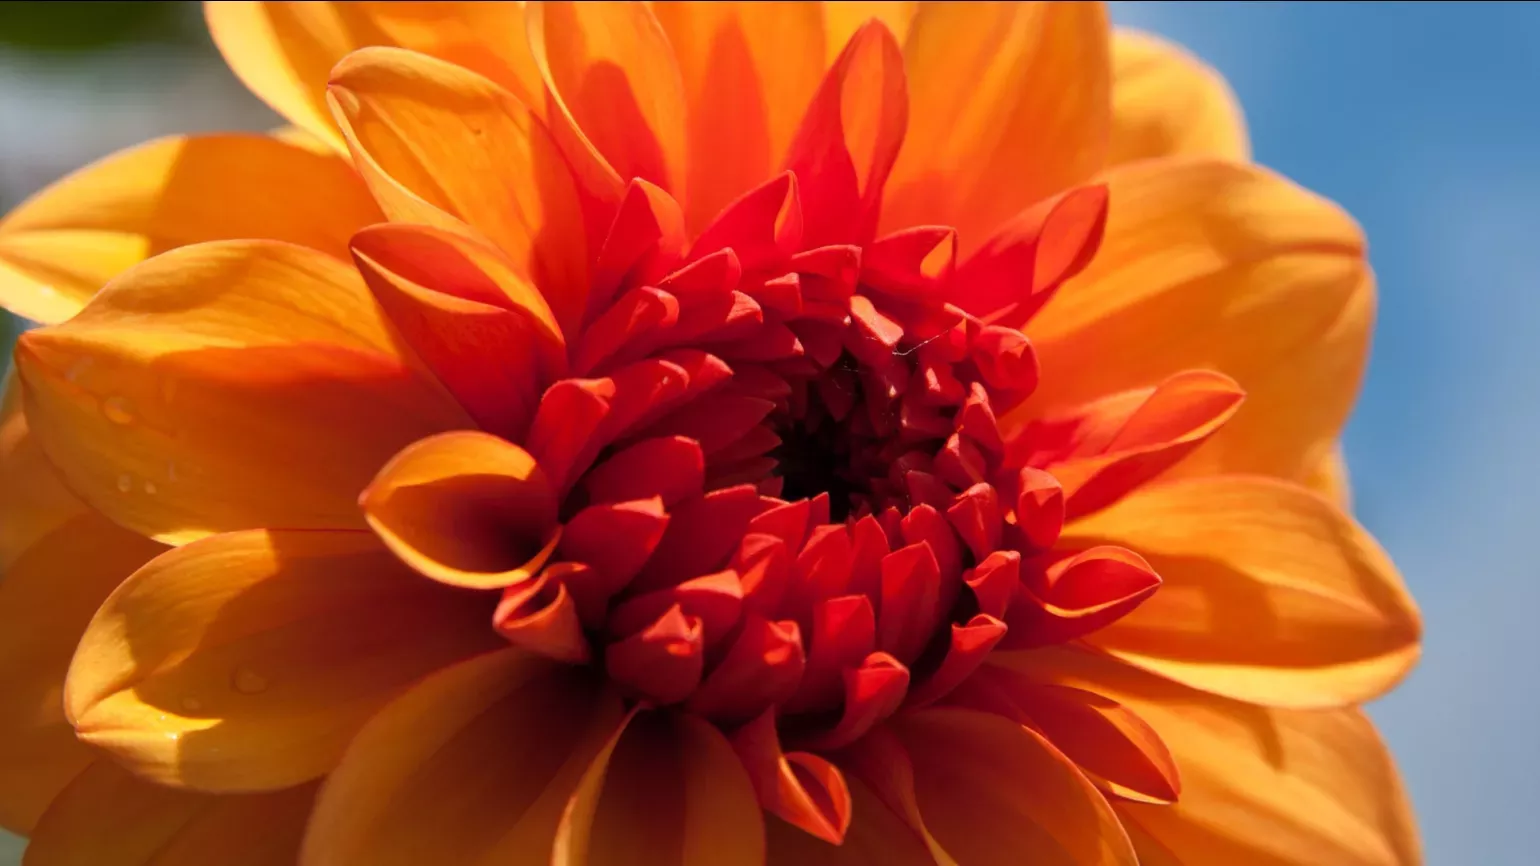 A close up on an orange dahlia flower